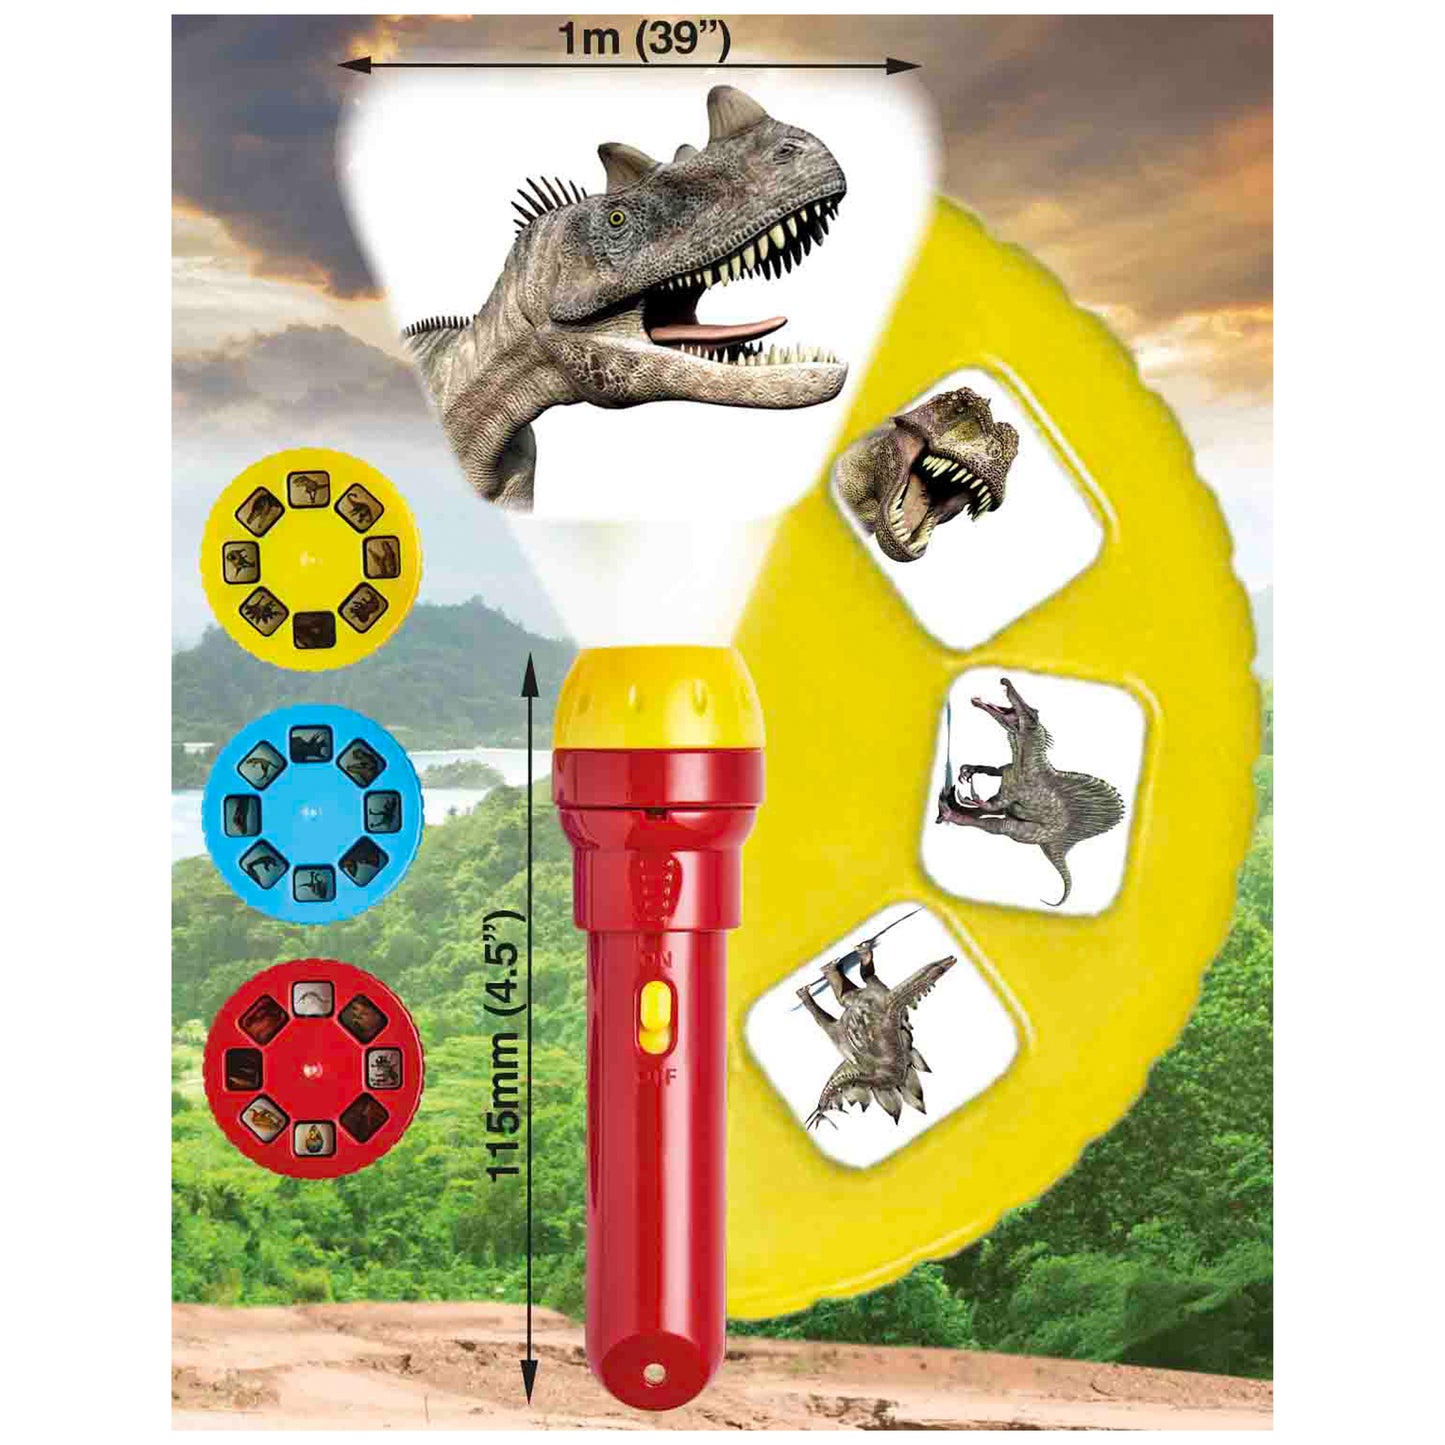 Dinosaur Torch & Projector